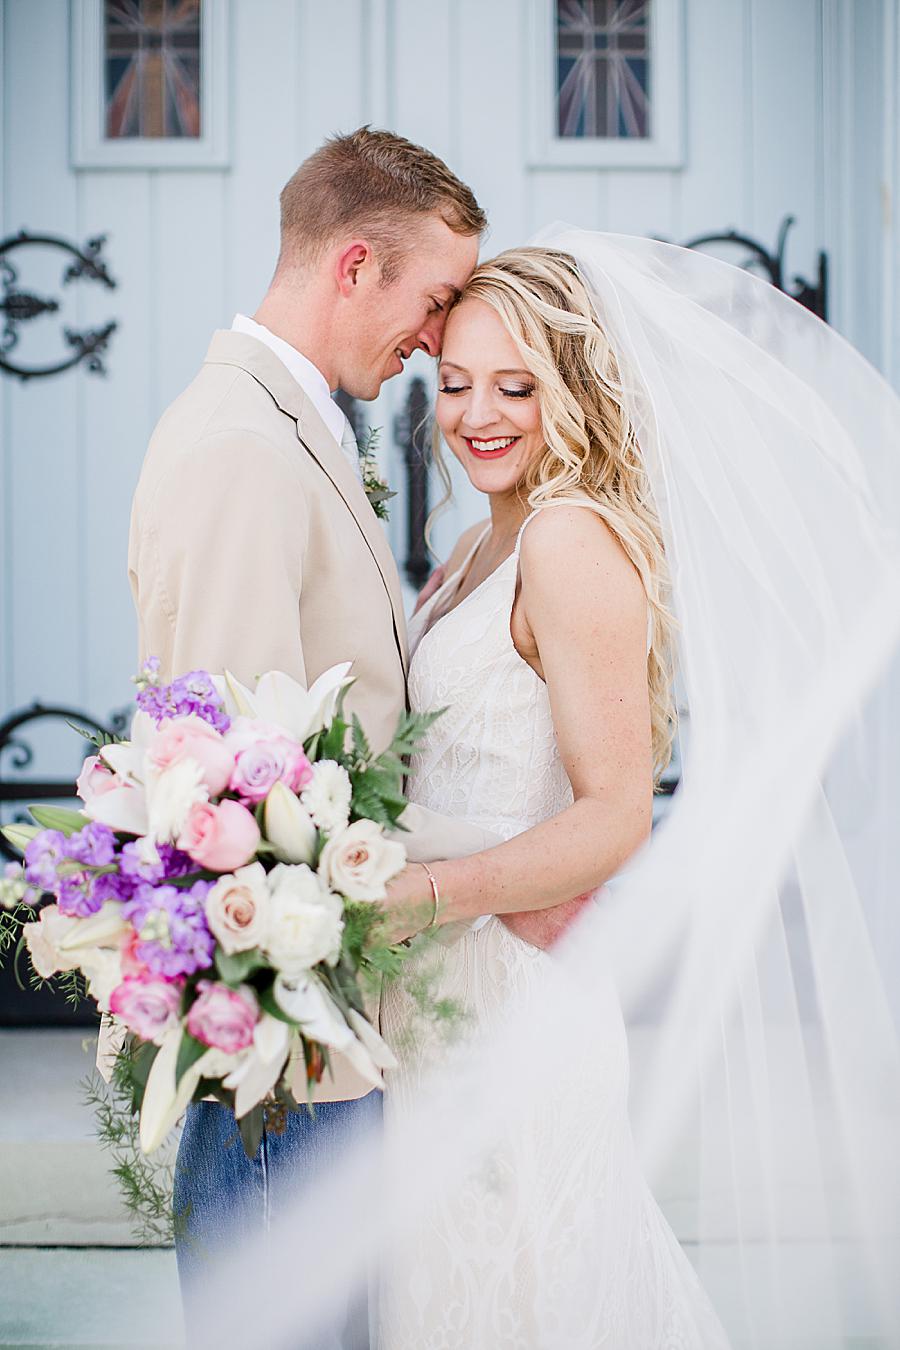 Bridal bouquet at this Dayton wedding by Knoxville Wedding Photographer, Amanda May Photos.